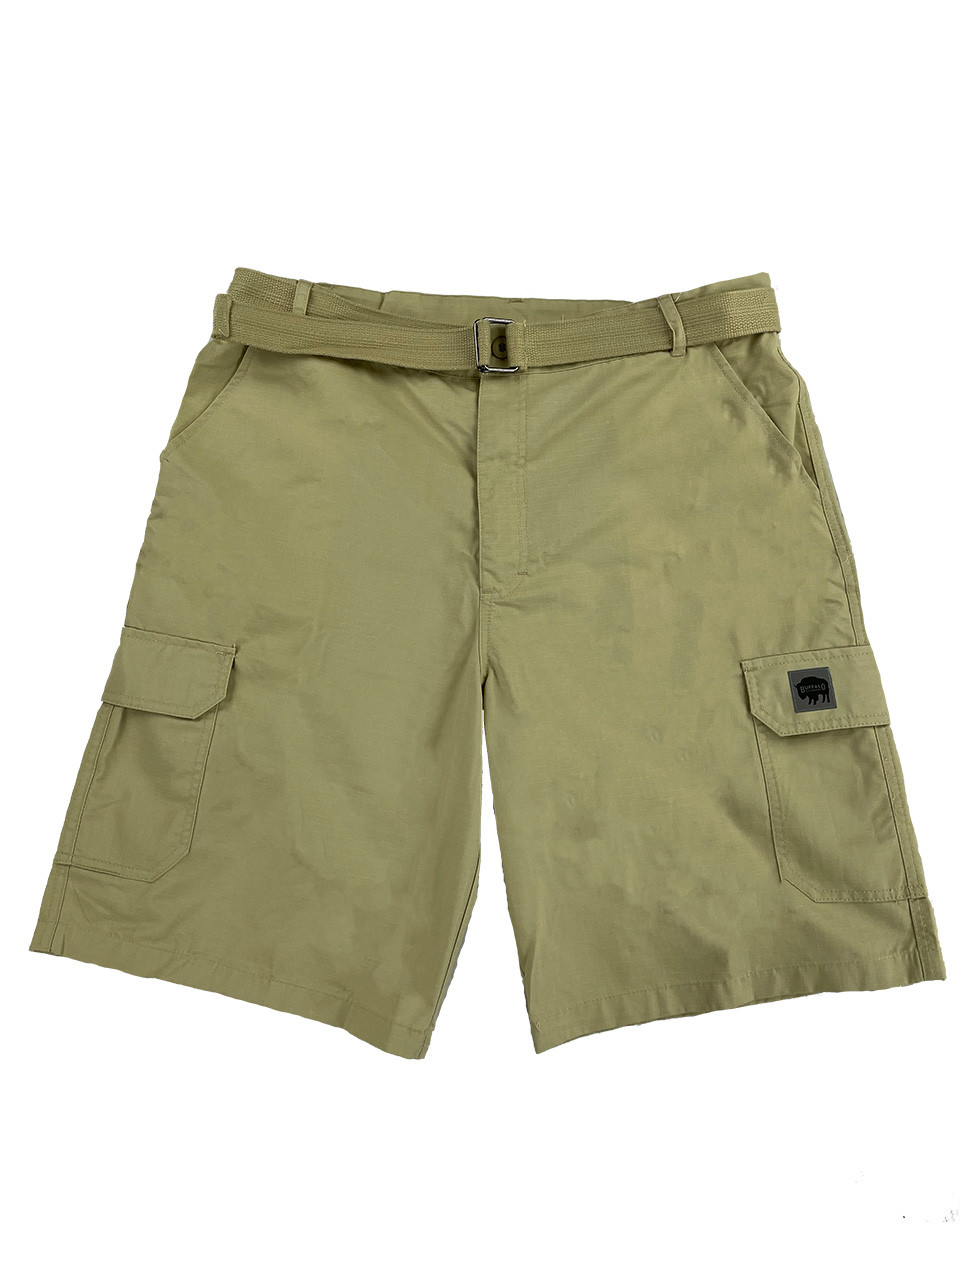 Buffalo Outdoors Workwear Men's Ripstop Cargo Short with Belt- Khaki 36